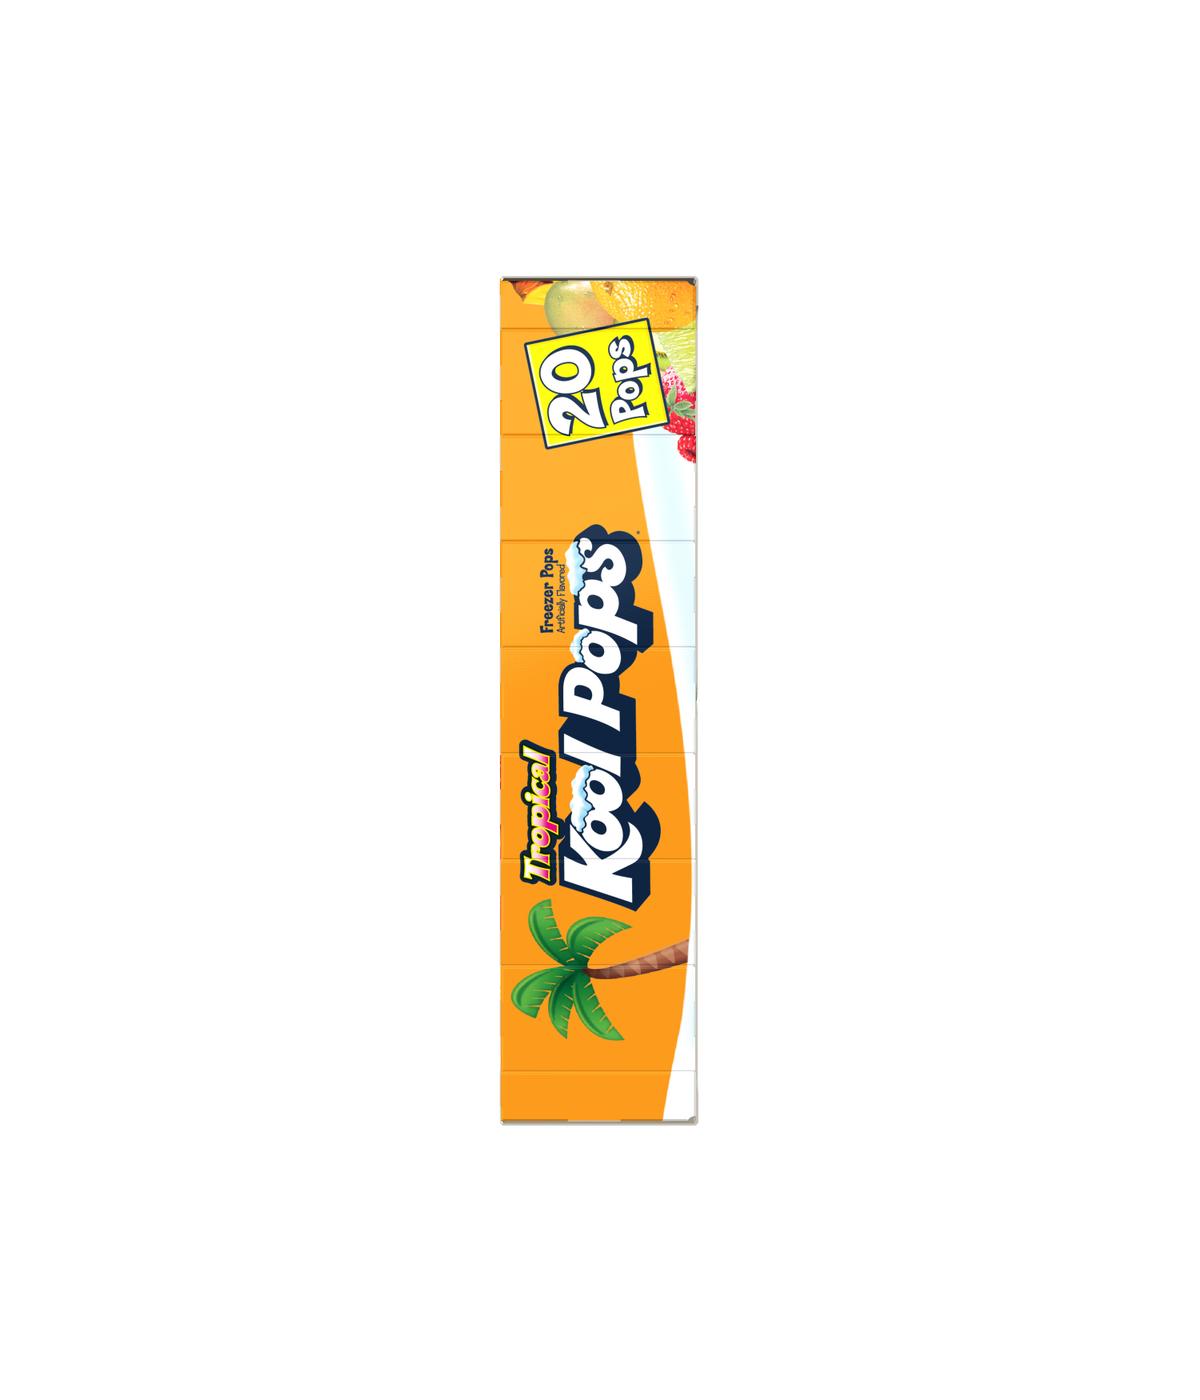 Kool Pops Freezer Bars - Tropical Flavors; image 2 of 4